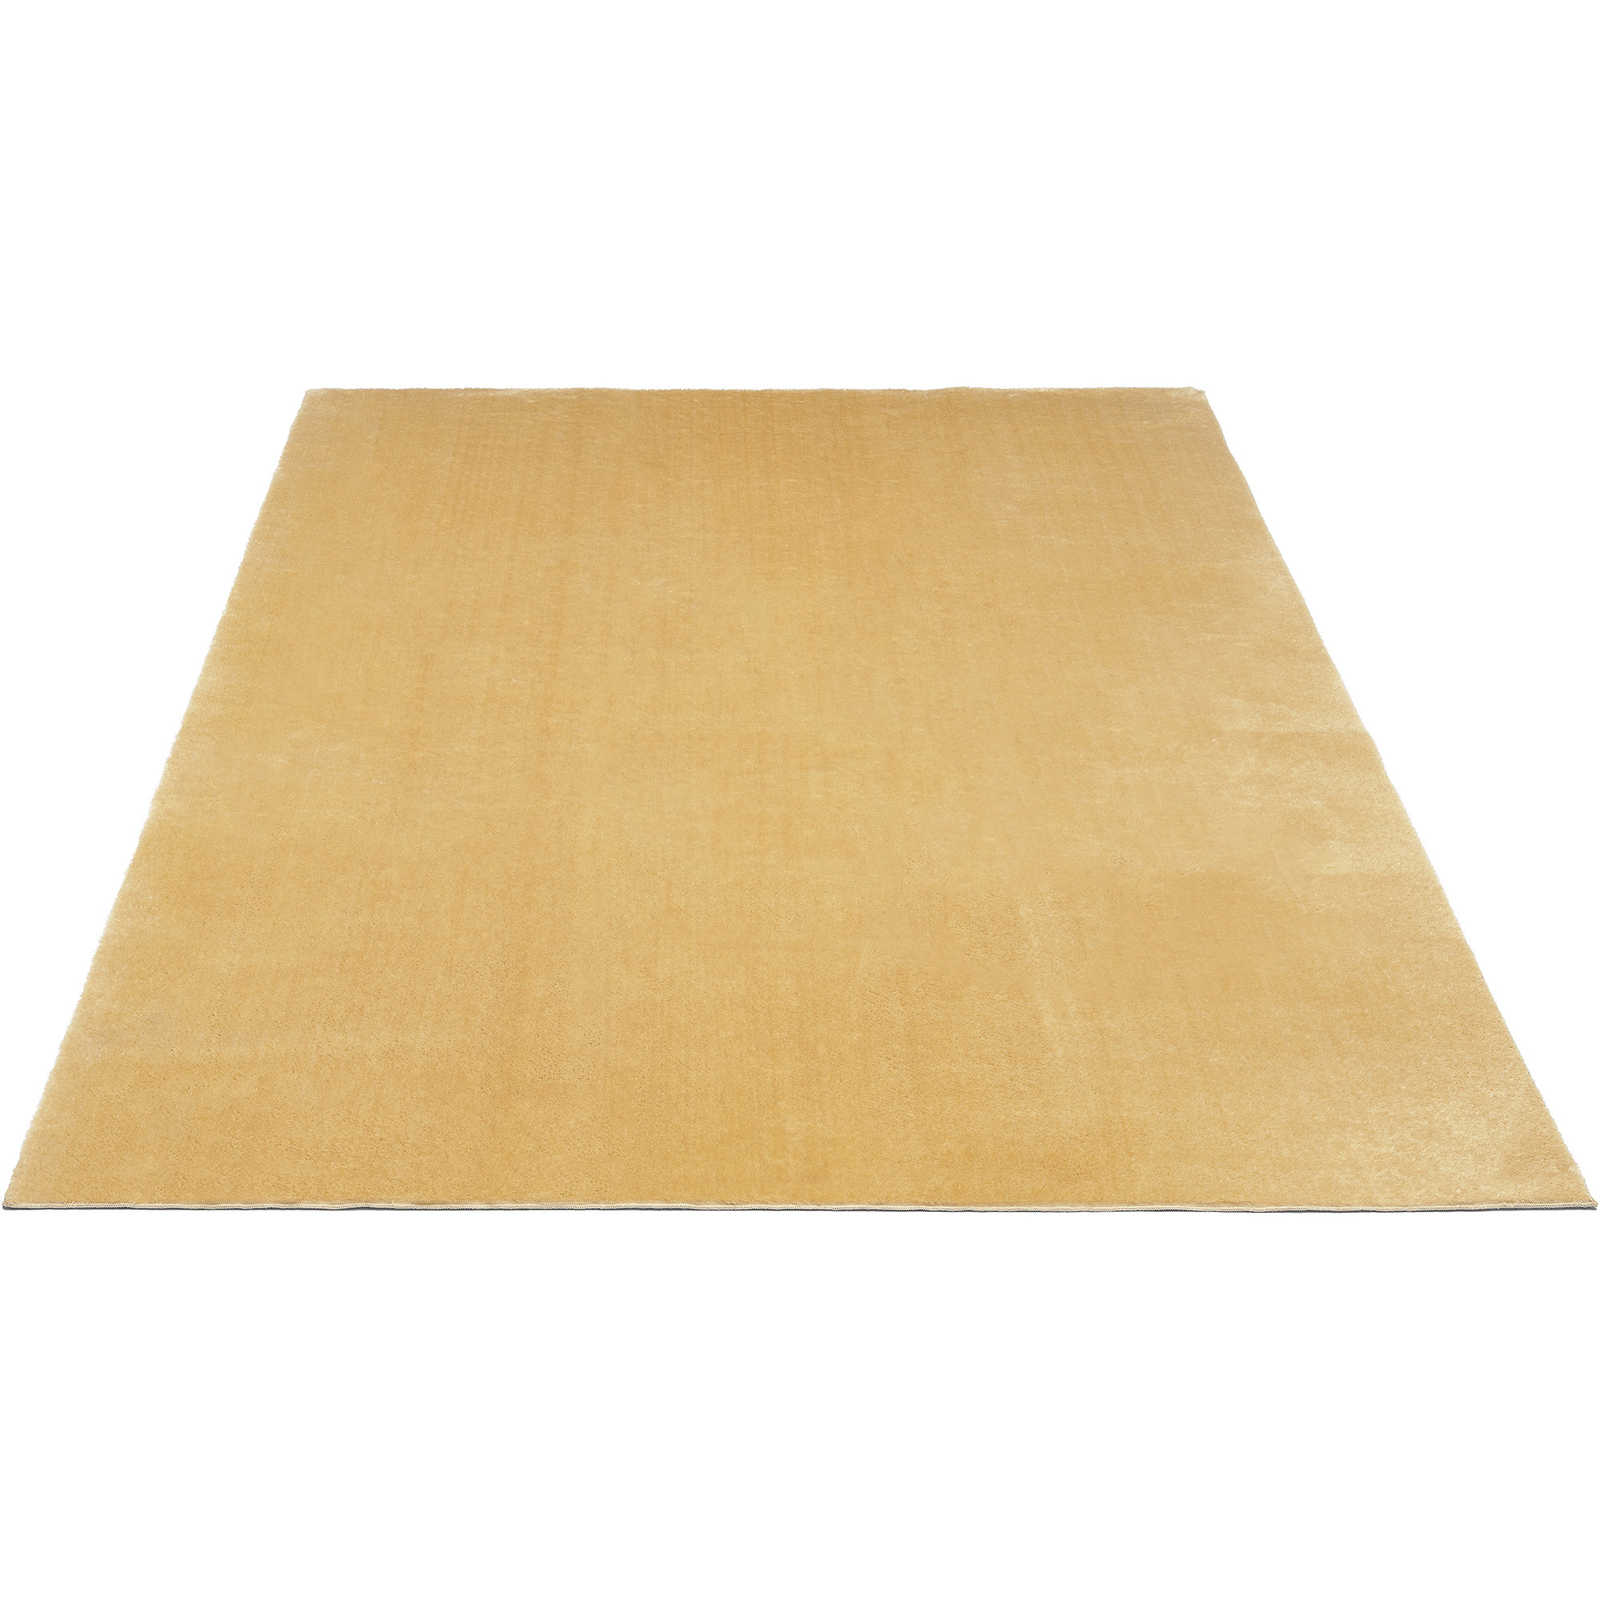 Cuddly soft high pile carpet in gold - 340 x 240 cm
